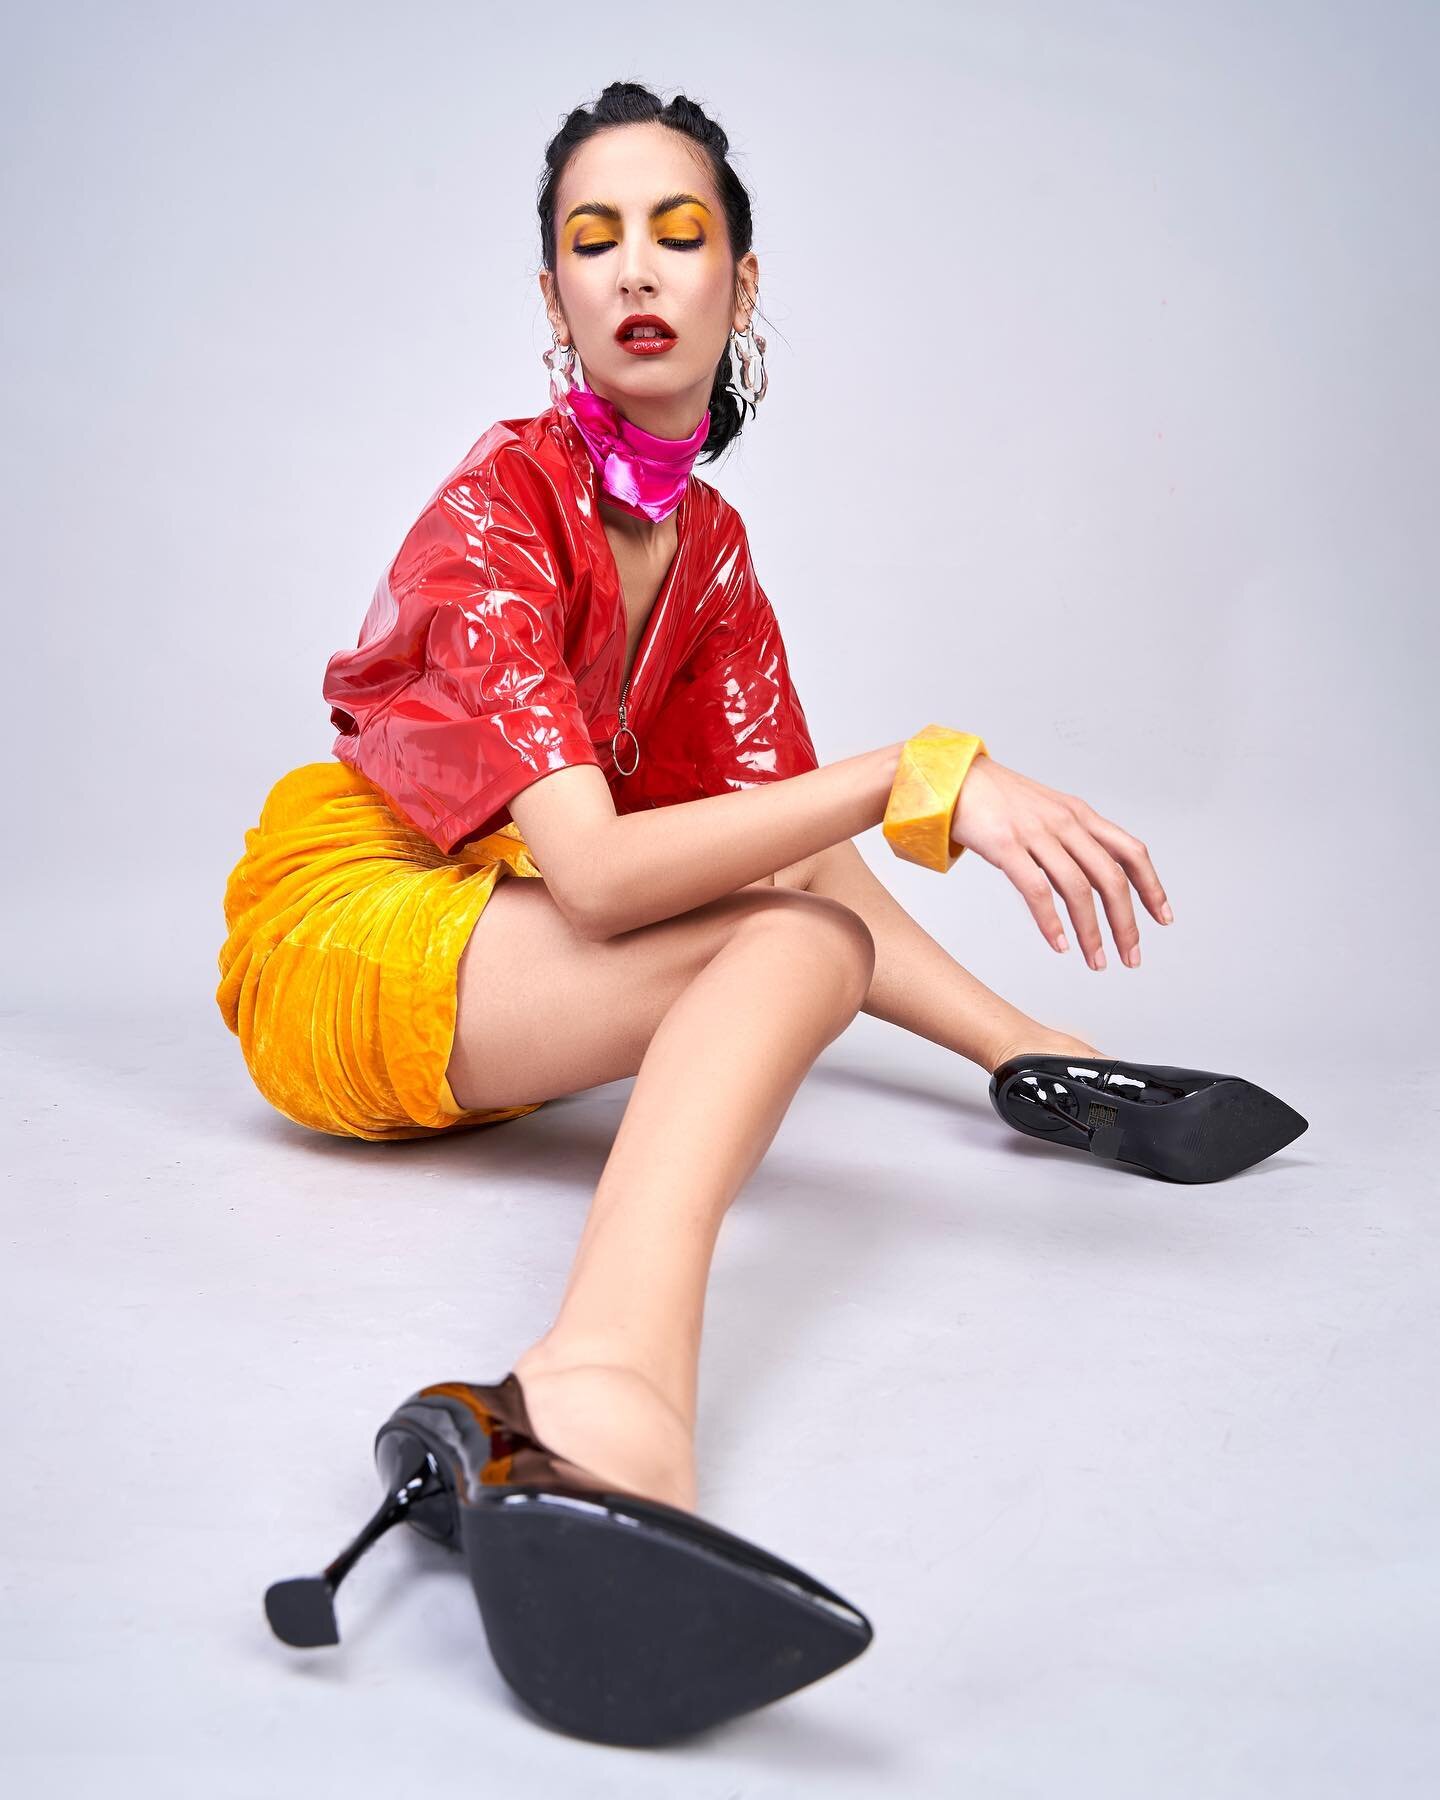 Makeup by @facedesigneruk 
Styled by @stylistjjr 
Model @seminara_giorgia 
Hair by @stellatsiledaki 
#fashion #fashionstylist #stylist #editorial #editorialfashion #model #highendfashion #colours #uk #ukmodel #london #londonphotographer #londonvideog